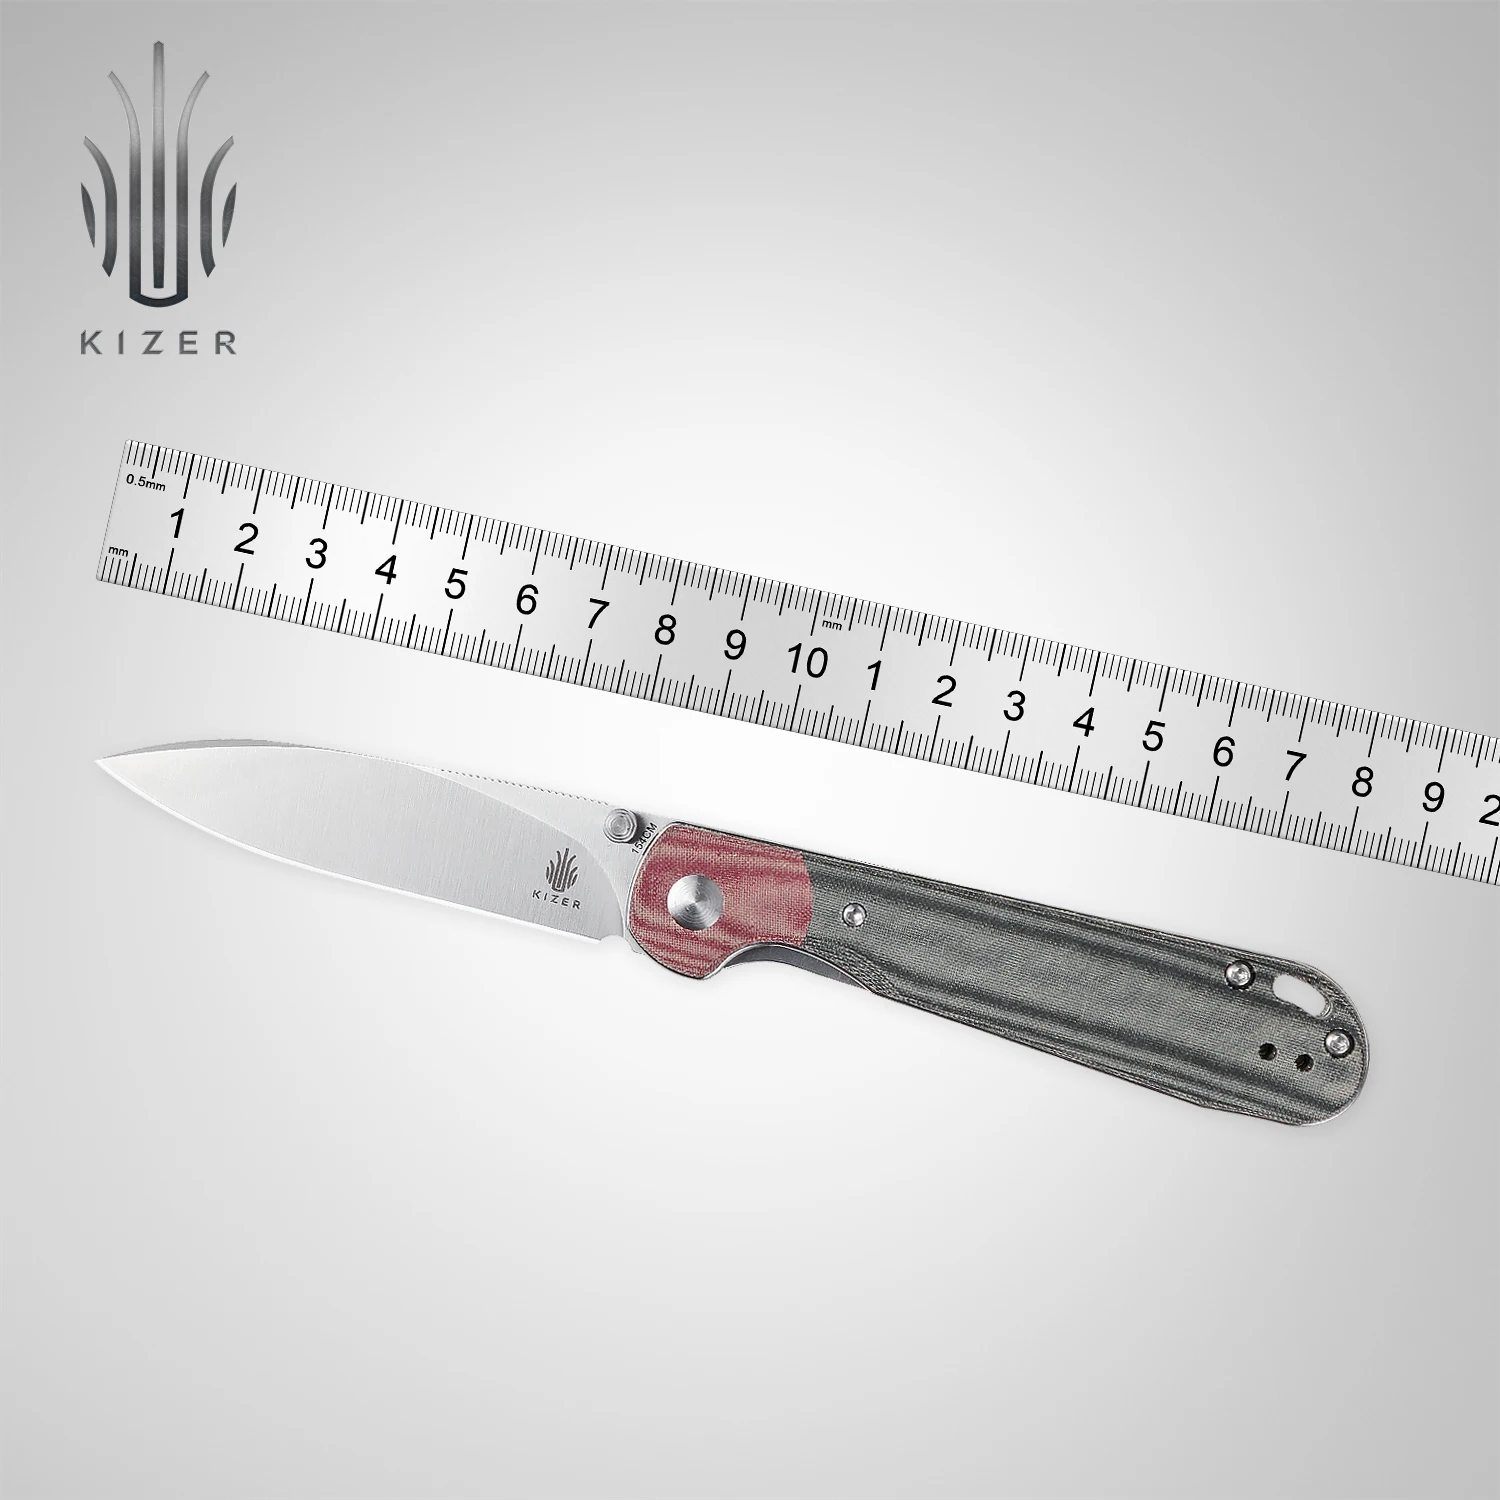 Kizer Folding Knife V3587C1 PPY Black Micarta Handle EDC 154CM Blade Pocket Knives New Outdoors Survival Tools for Hunting